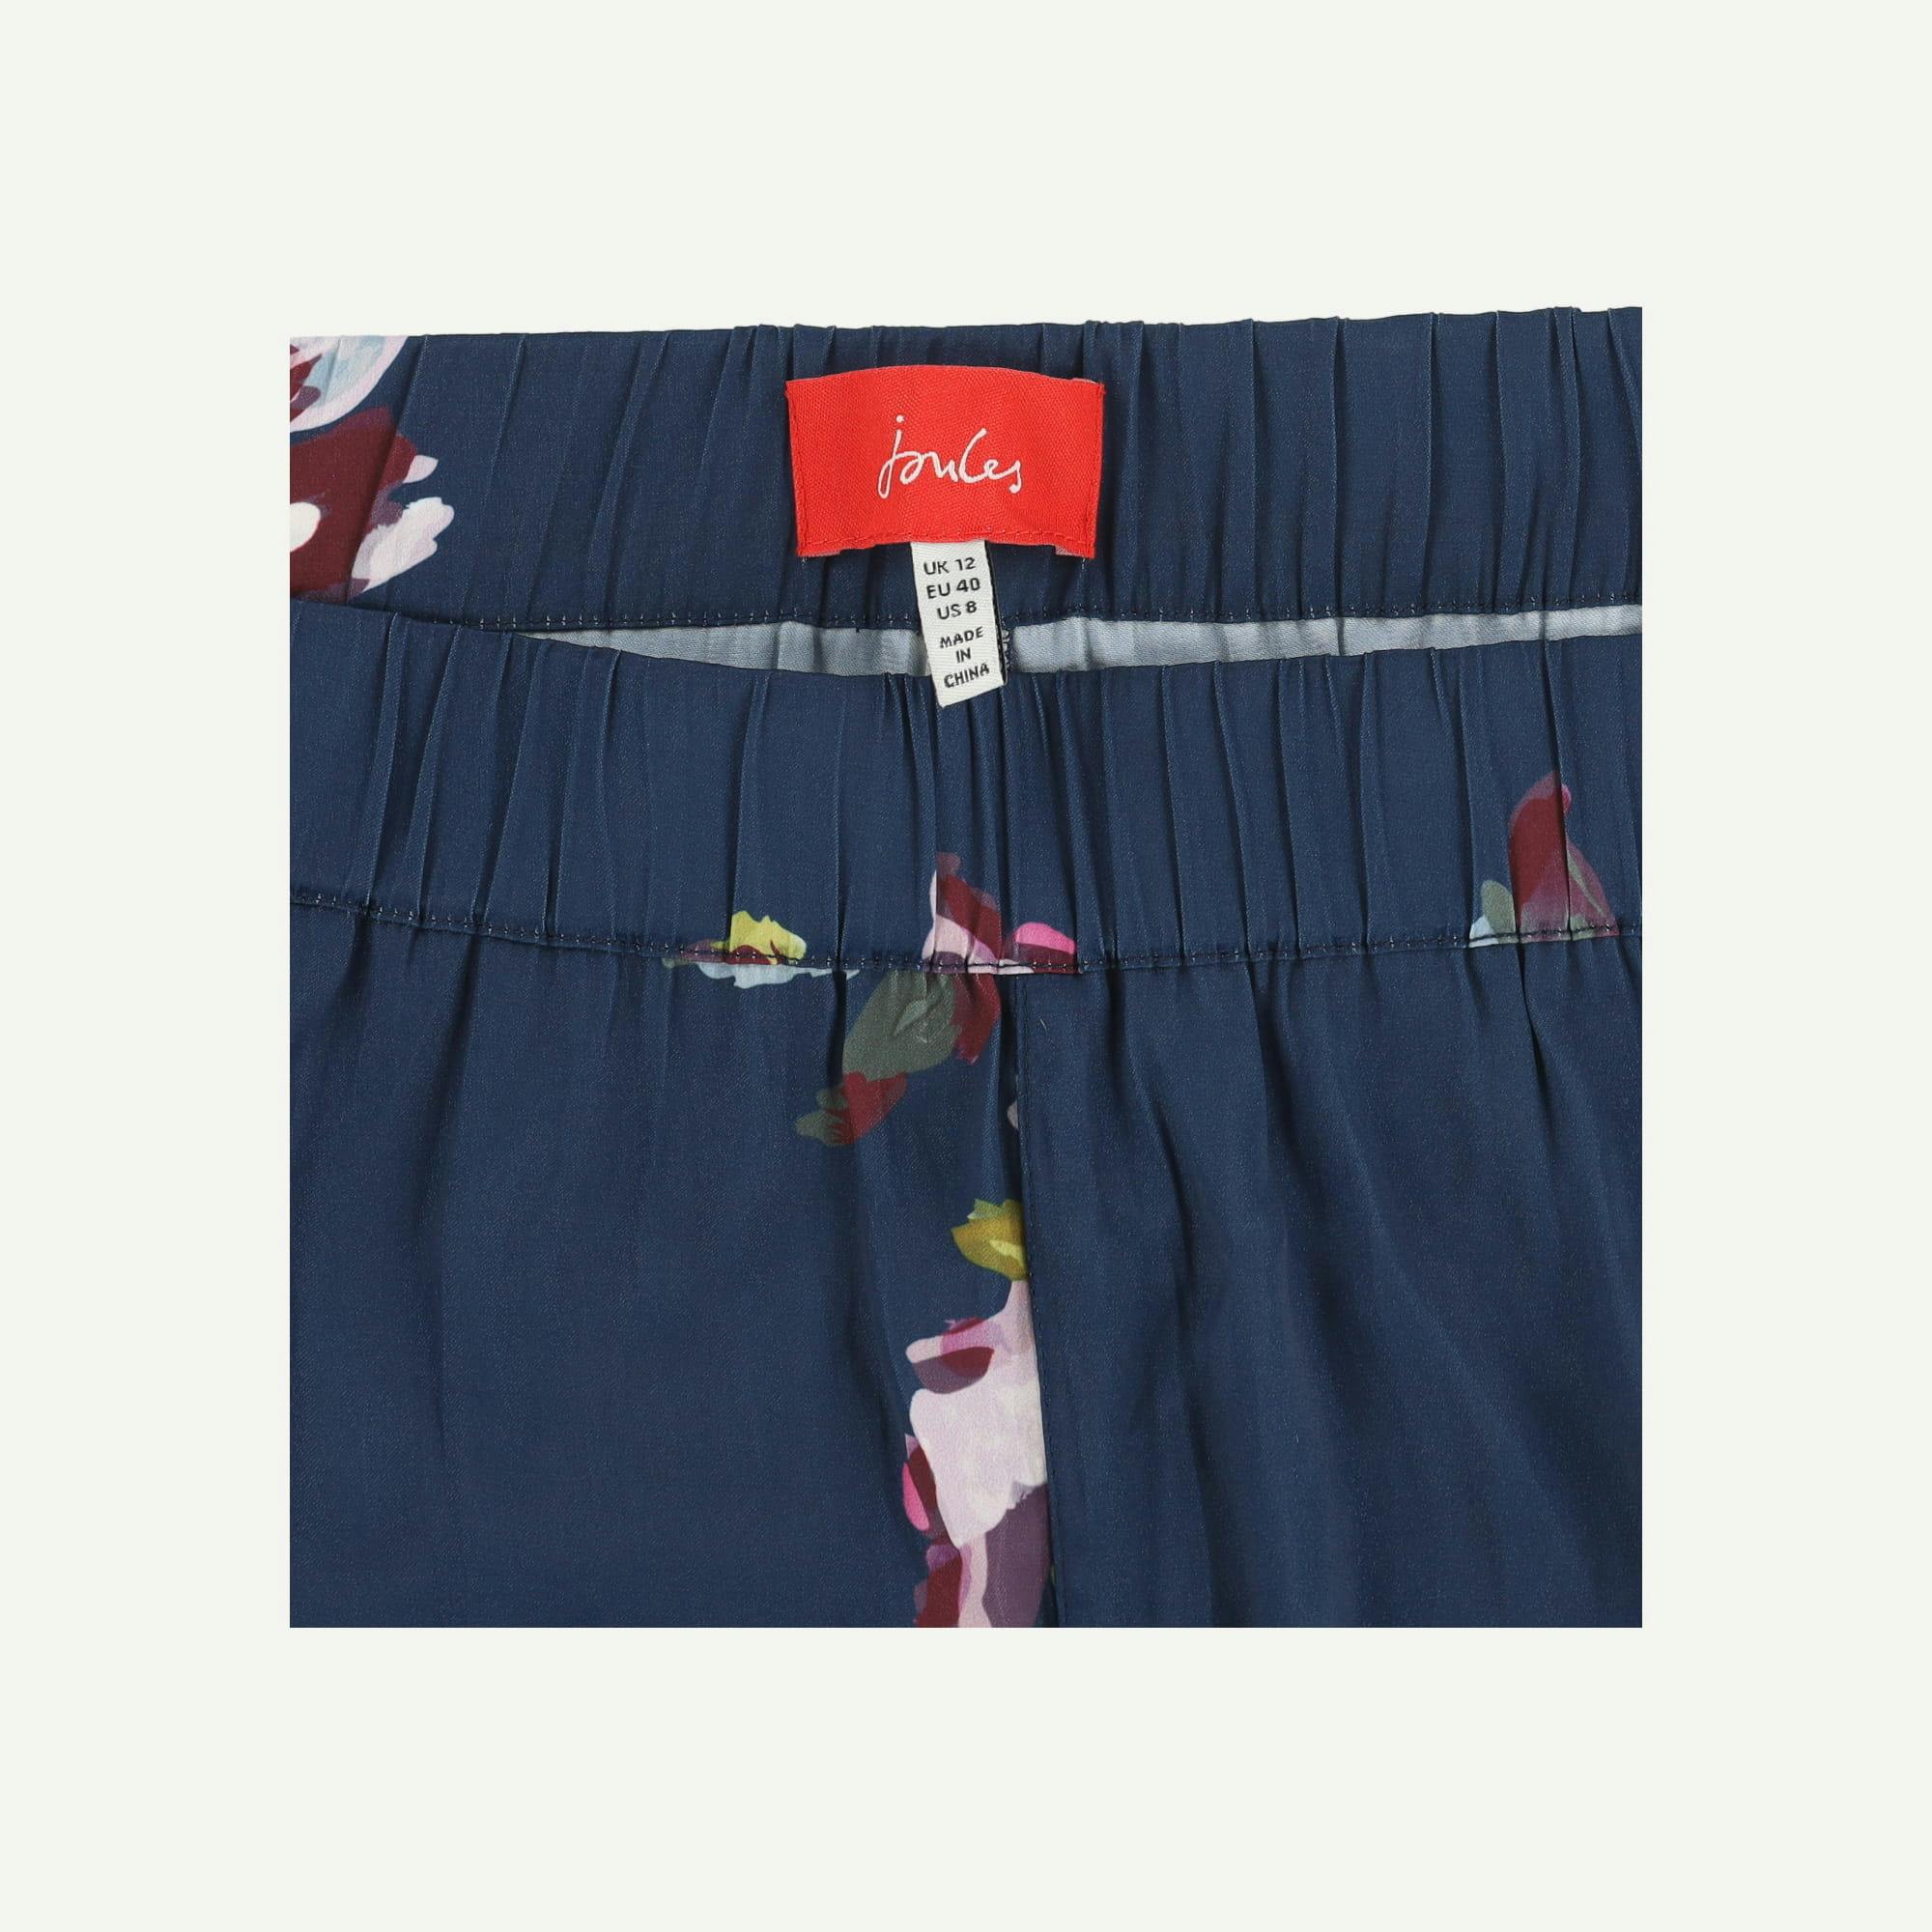 Joules Pre-loved Navy Pyjama Trousers